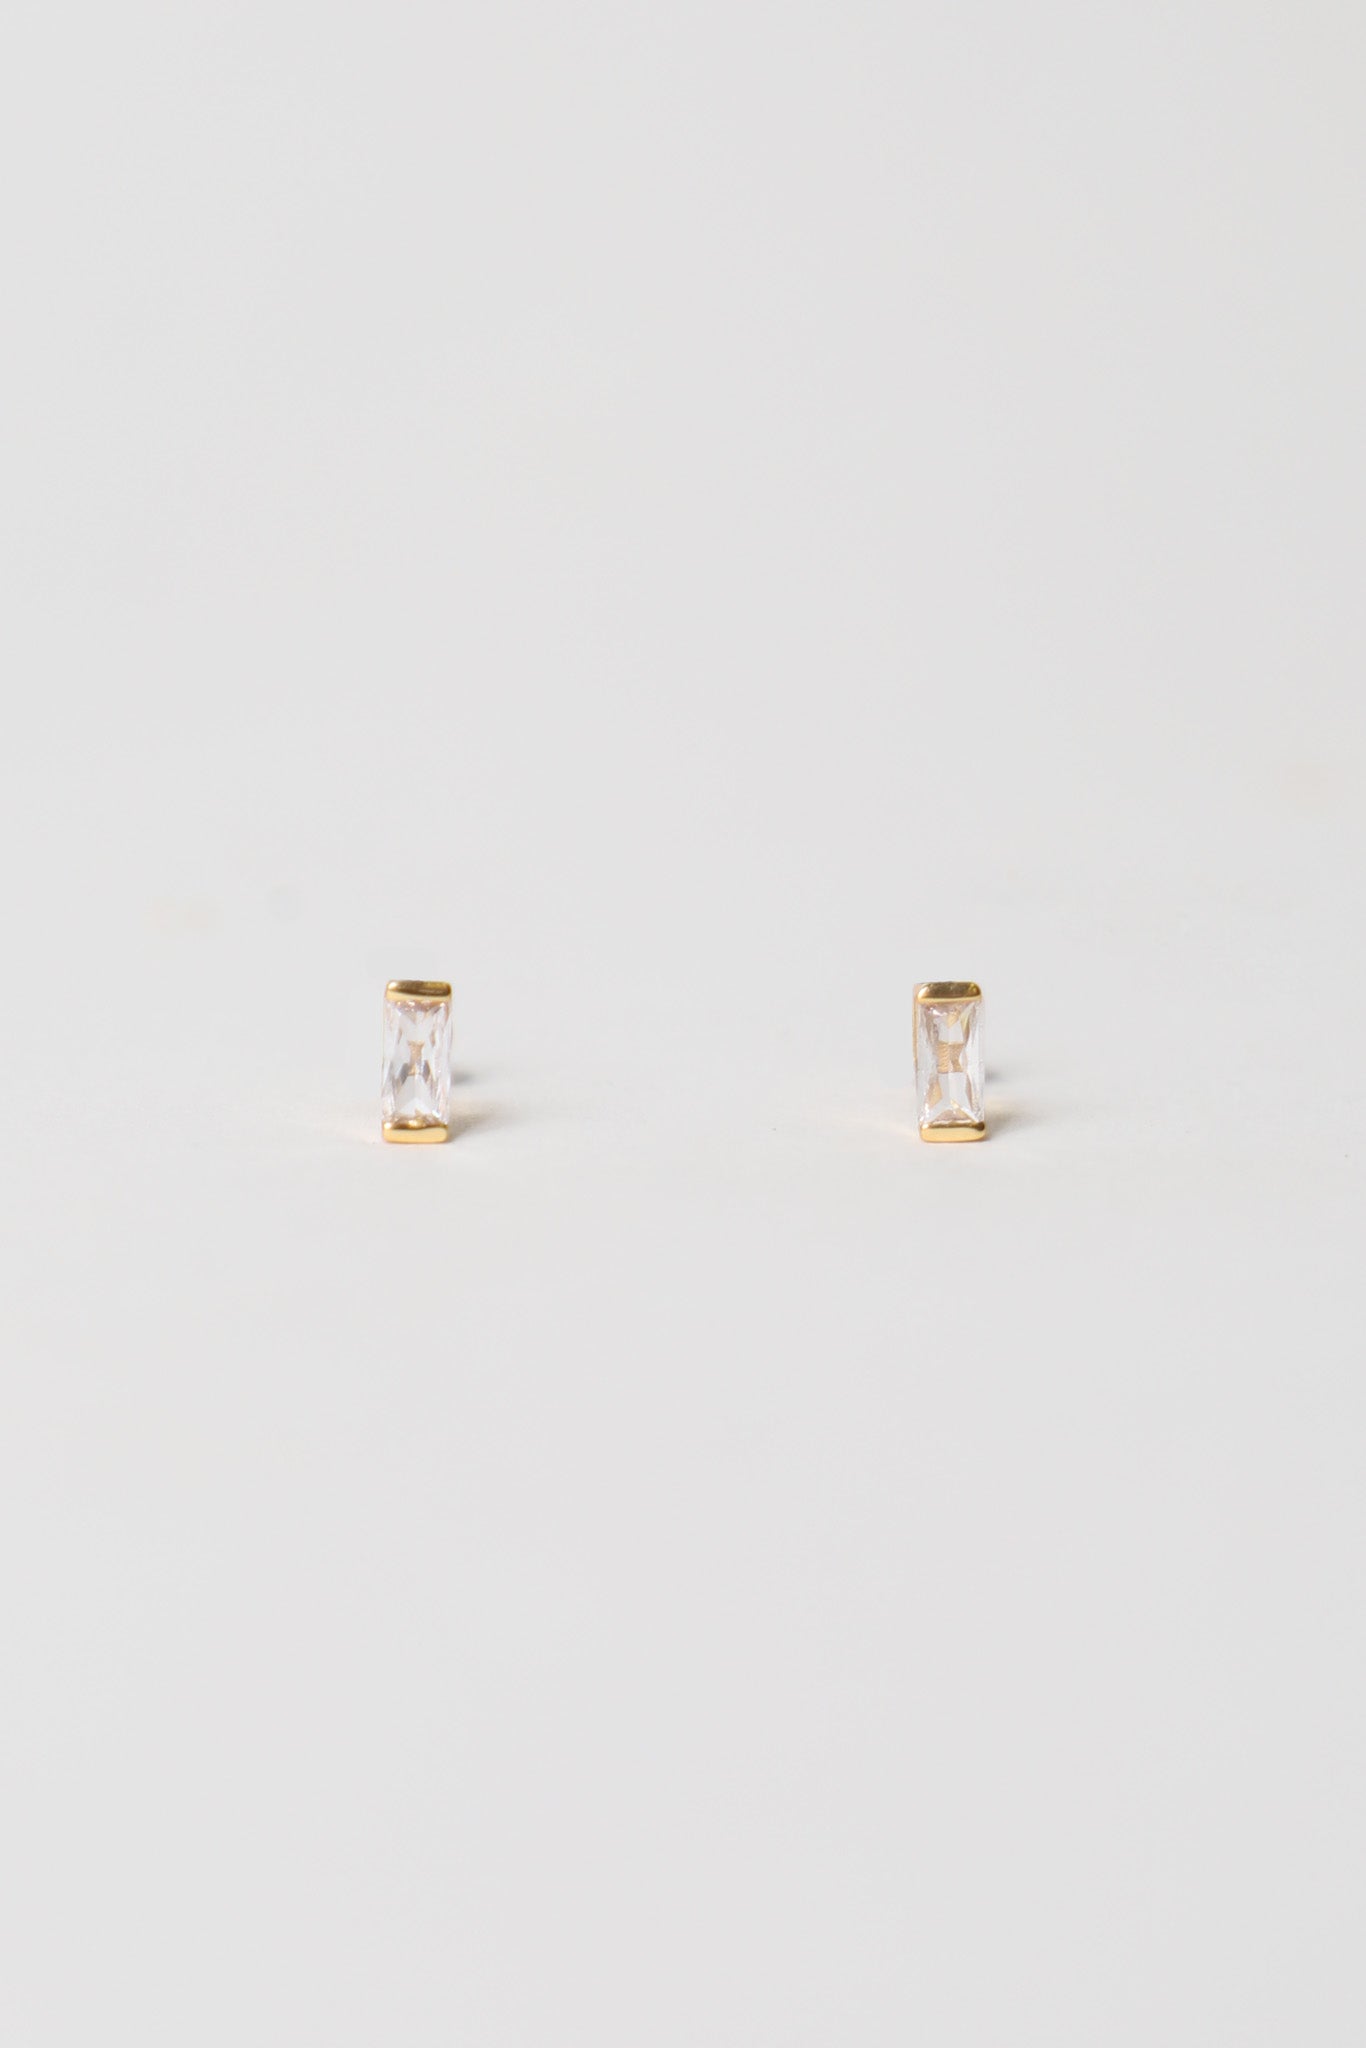 SUZANNE KALAN 18K Yellow Gold Diamond Baguette Stud Earrings   Bloomingdales